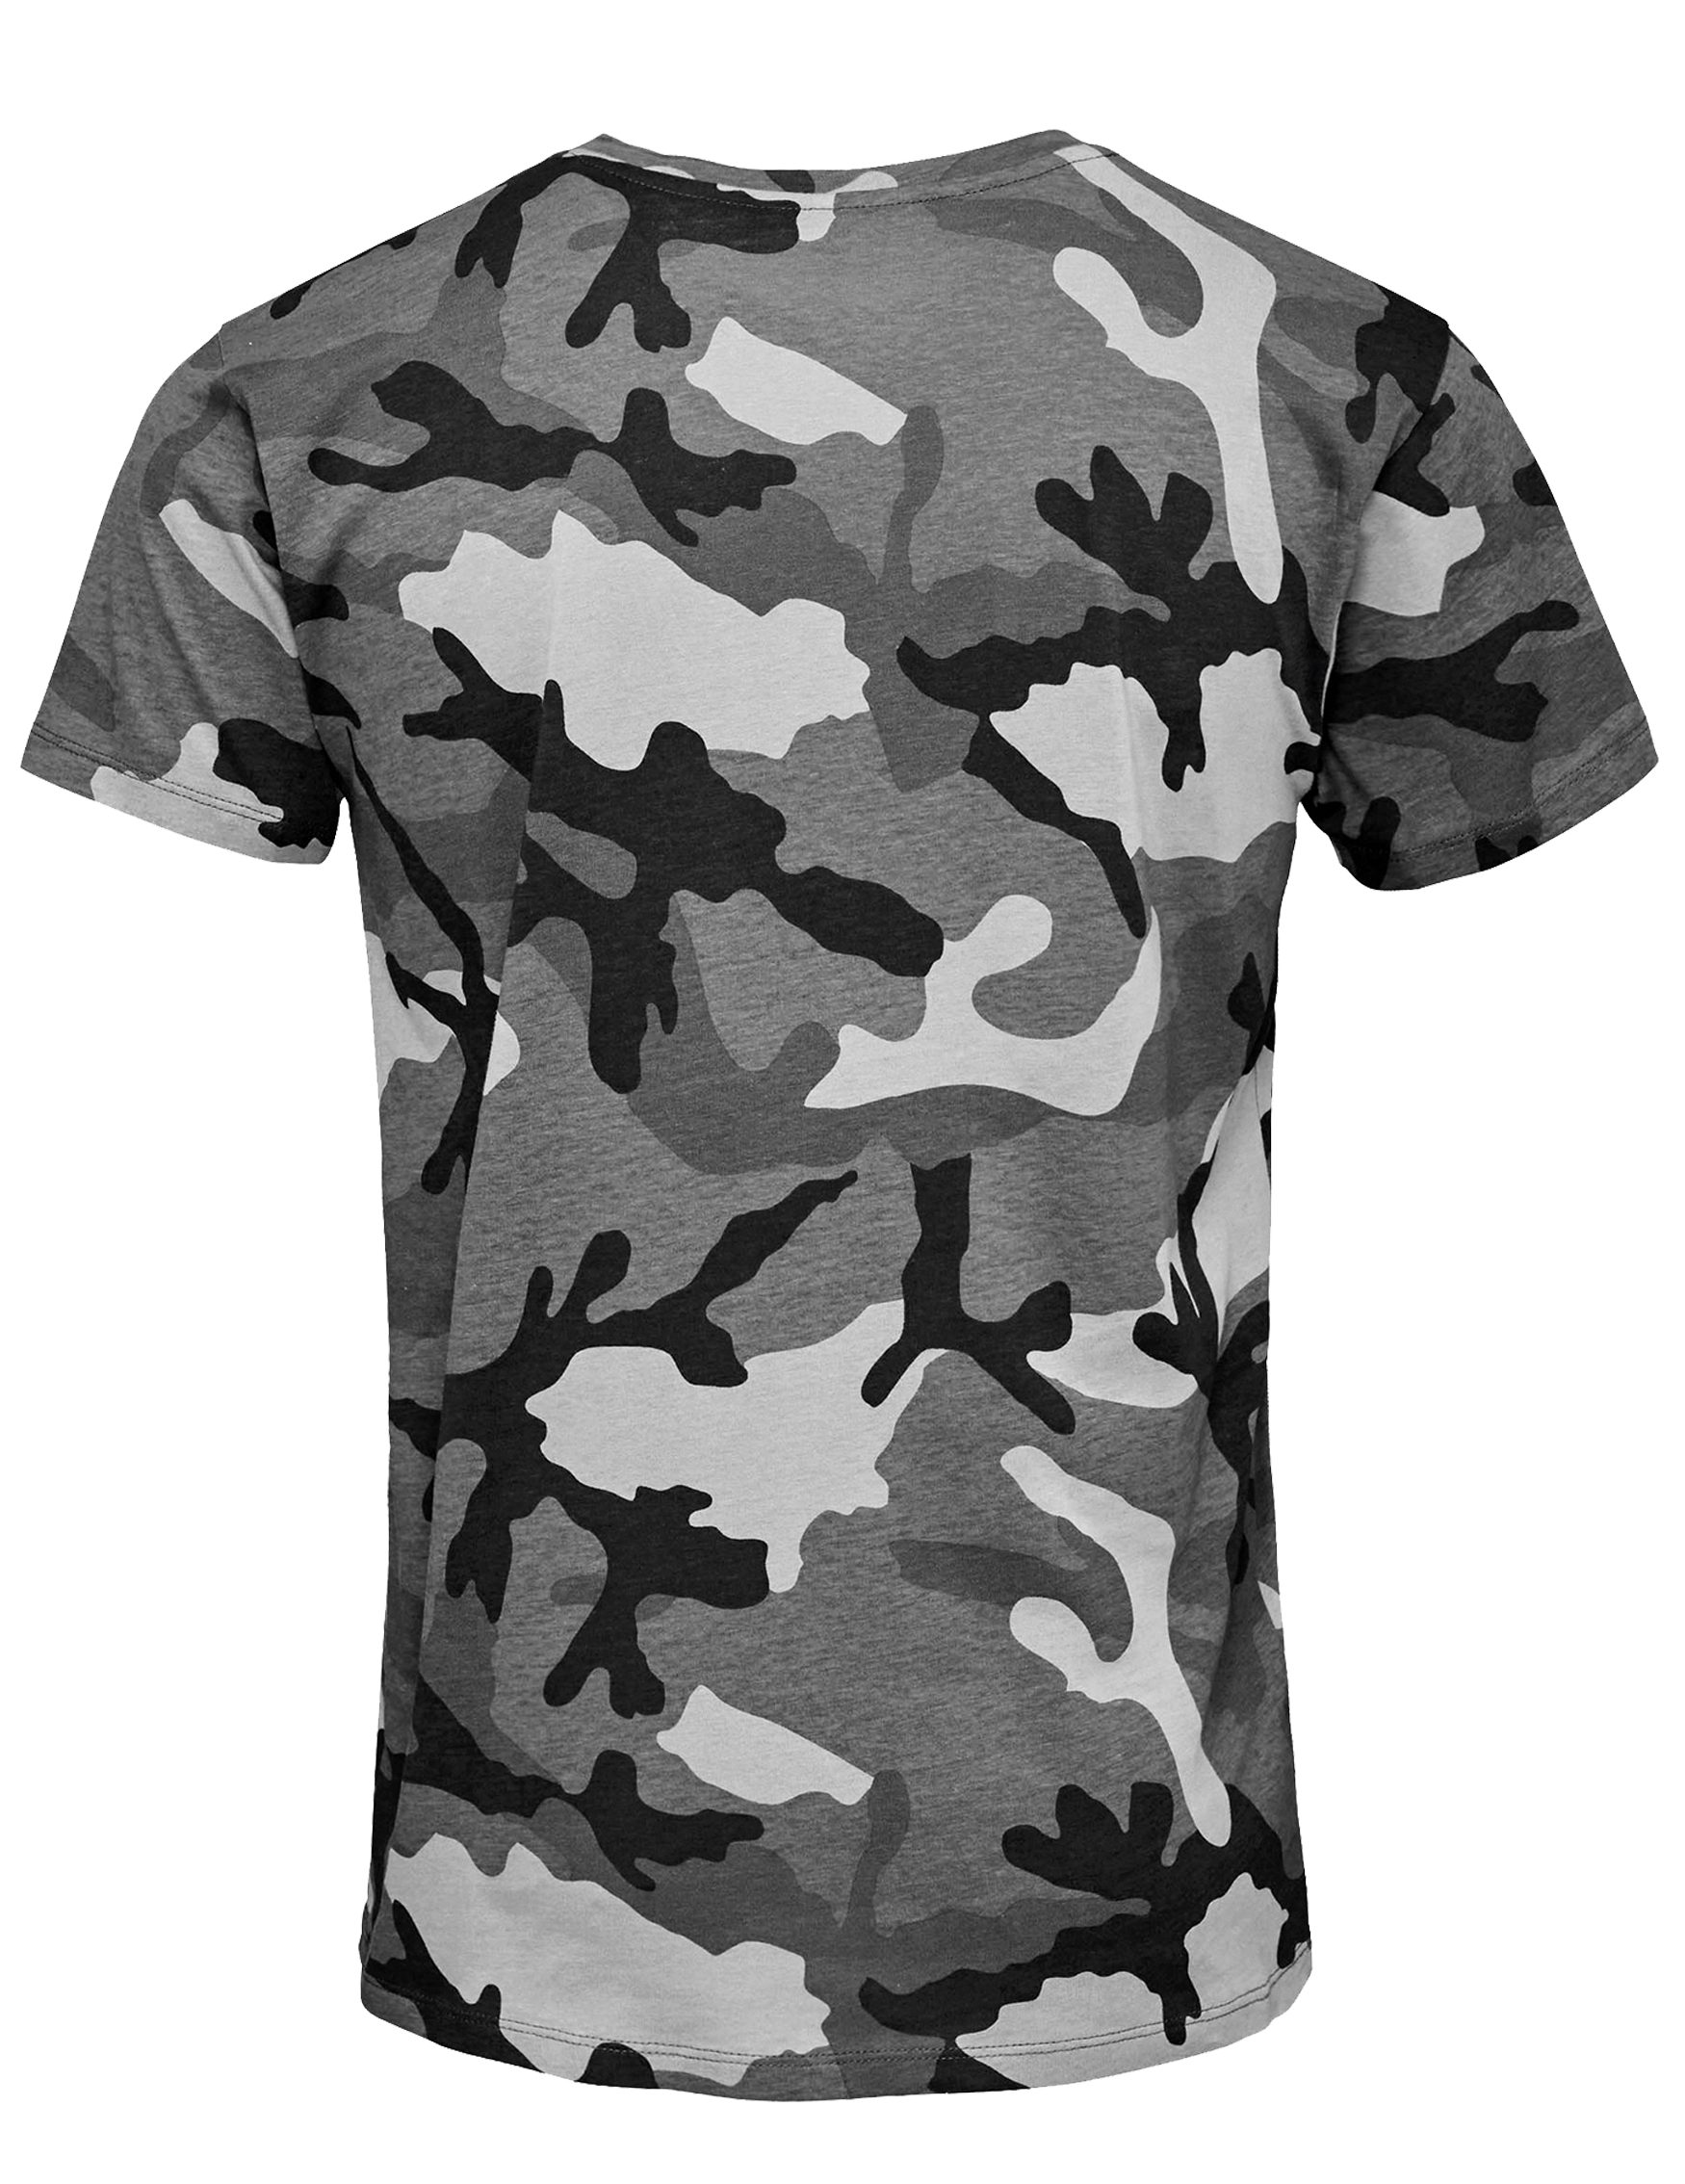 Art & Detail Shirt Camo Military, Army Blau T-Shirt Tarn lieferbar, Camo Camouflage Grey Farben Grün in Look Grau und